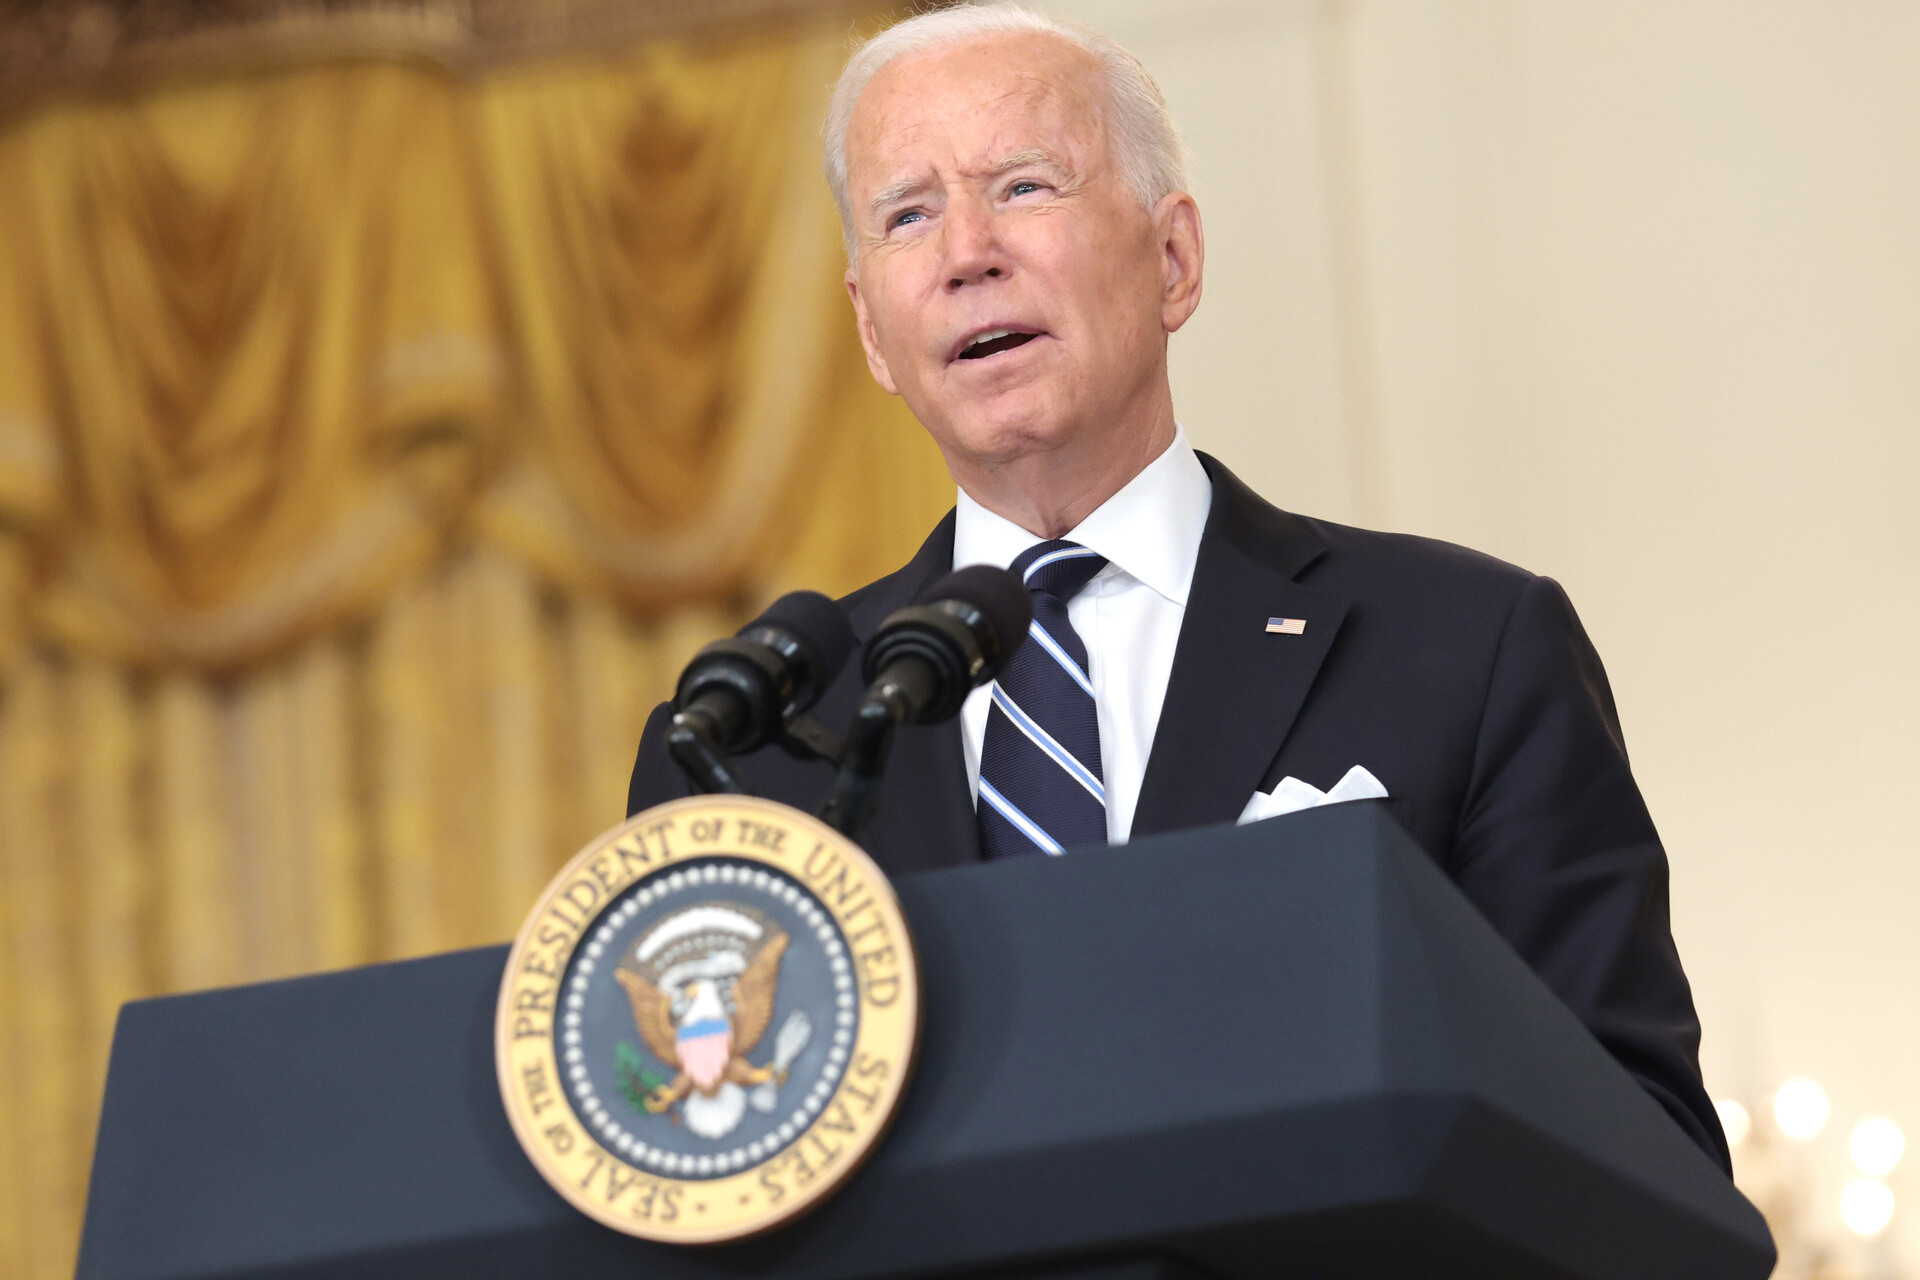 President Biden speaks at a podium.